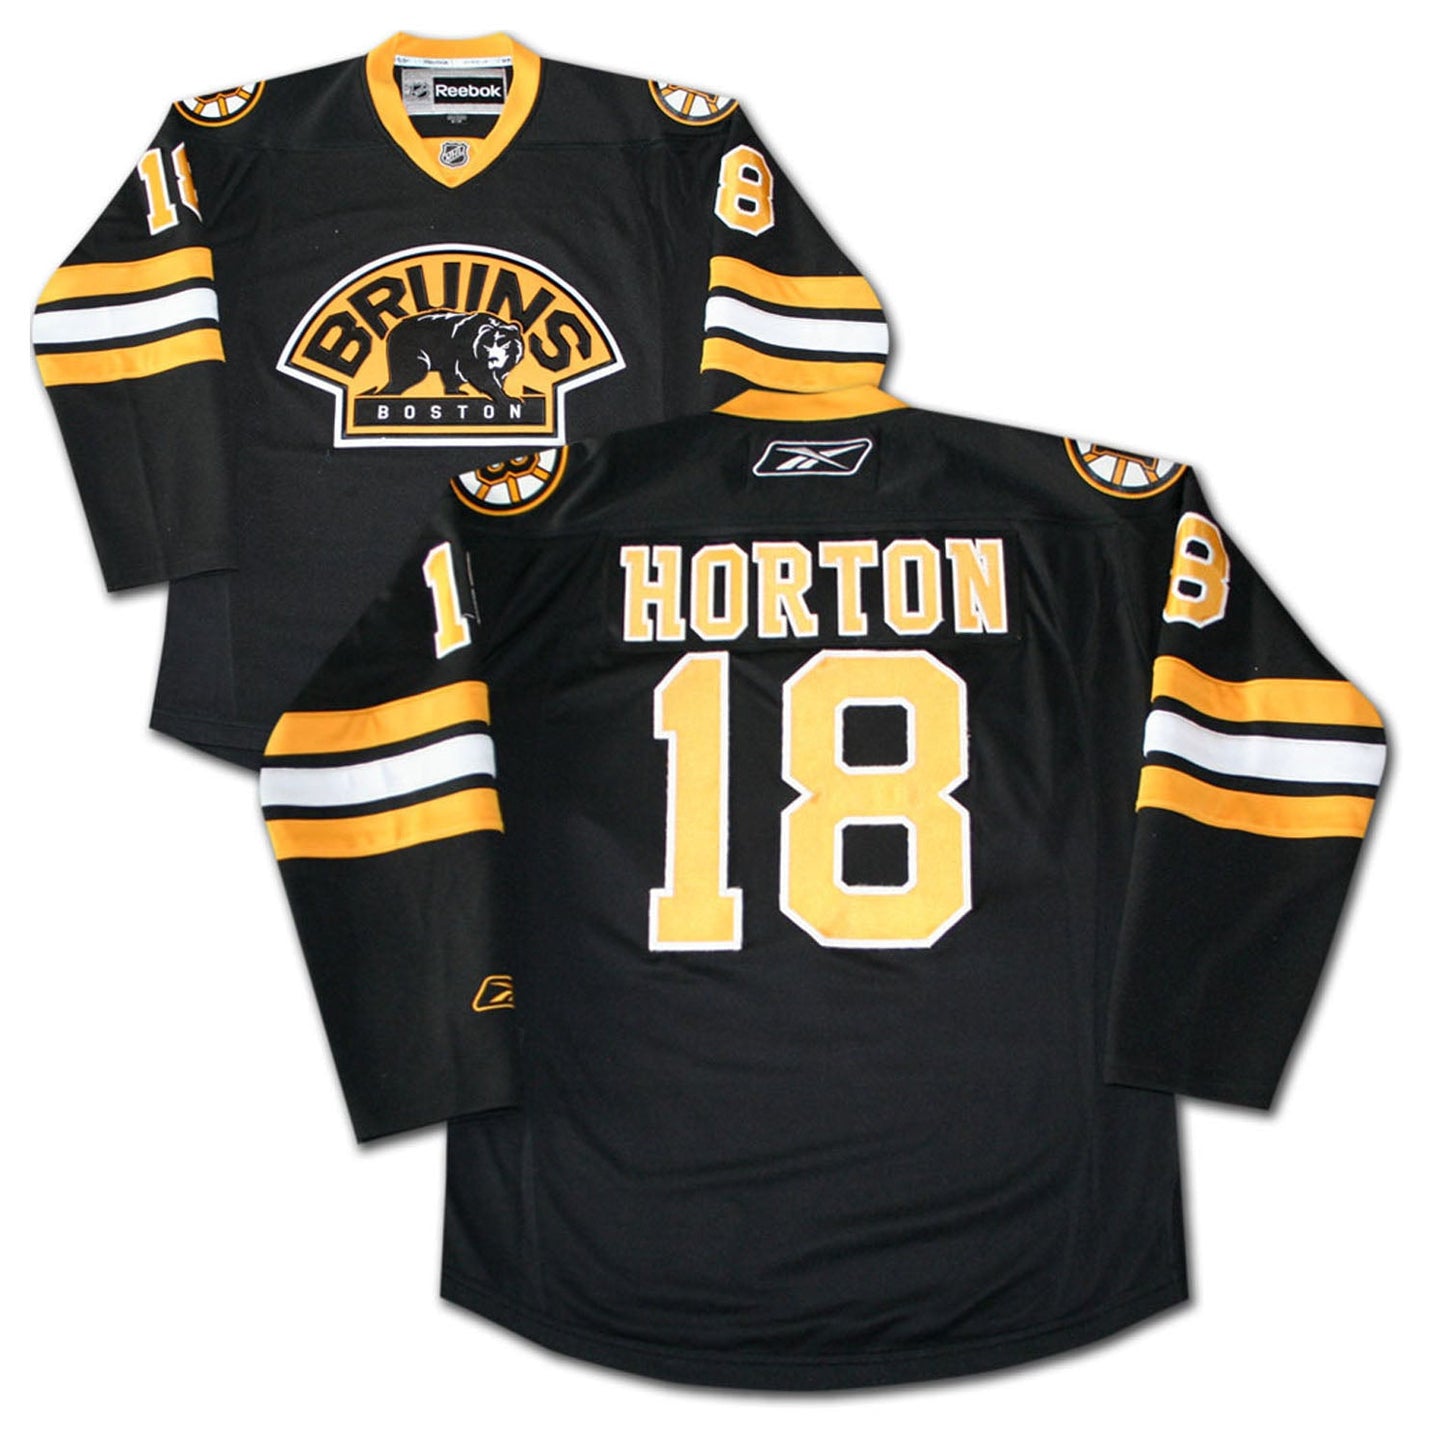 NHL Nathan Horton Boston Bruins 18 Jersey